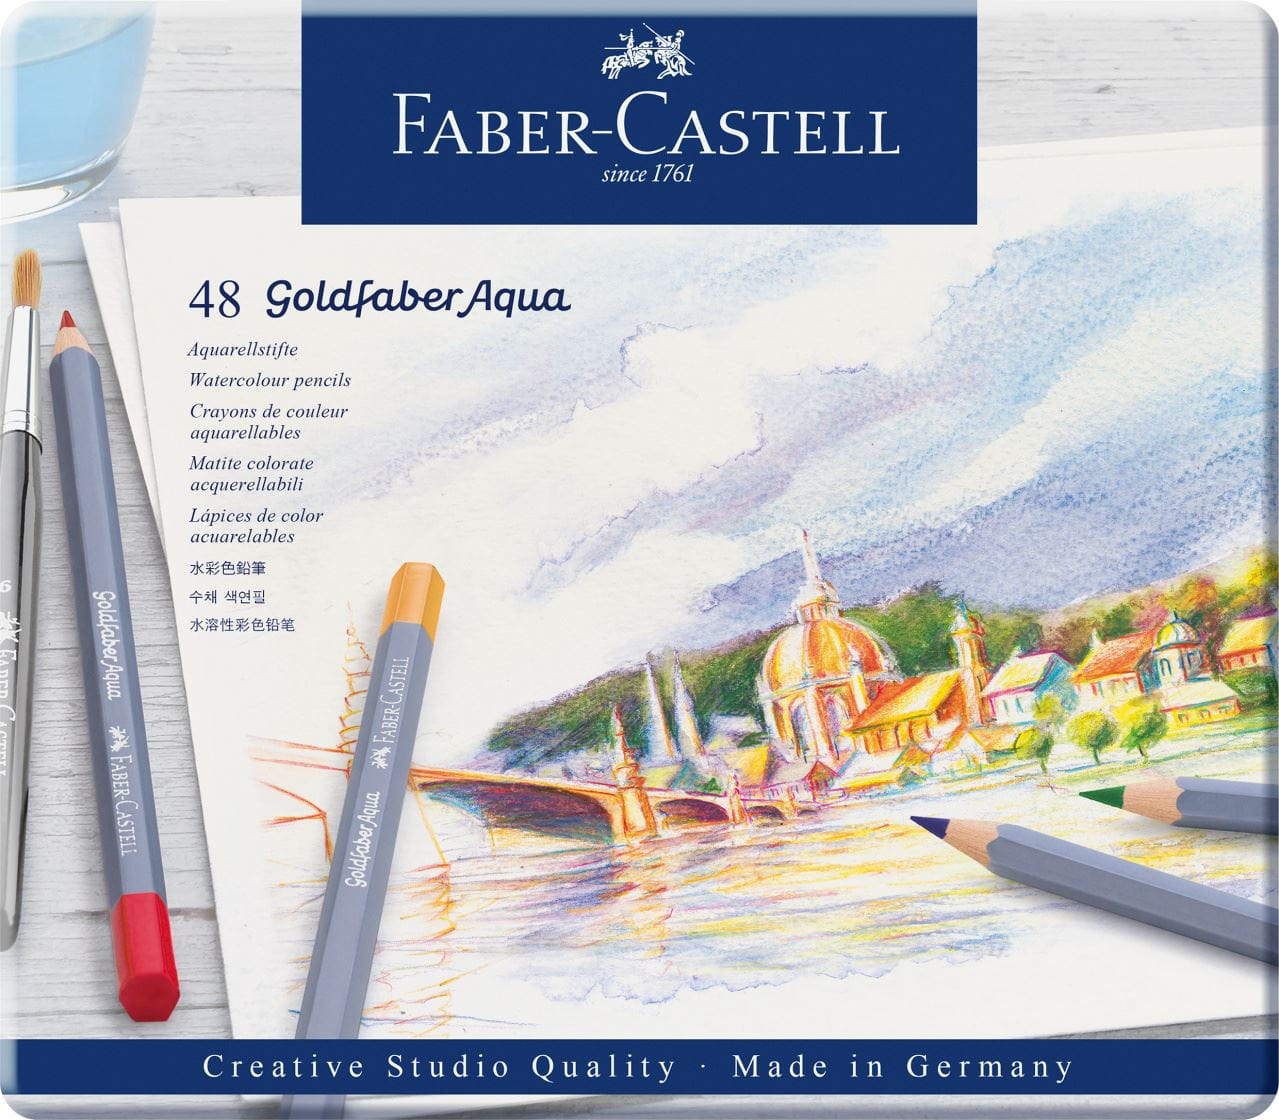 Faber-Castell - Goldfaber Aqua Aquarellstift, 48er Metalletui